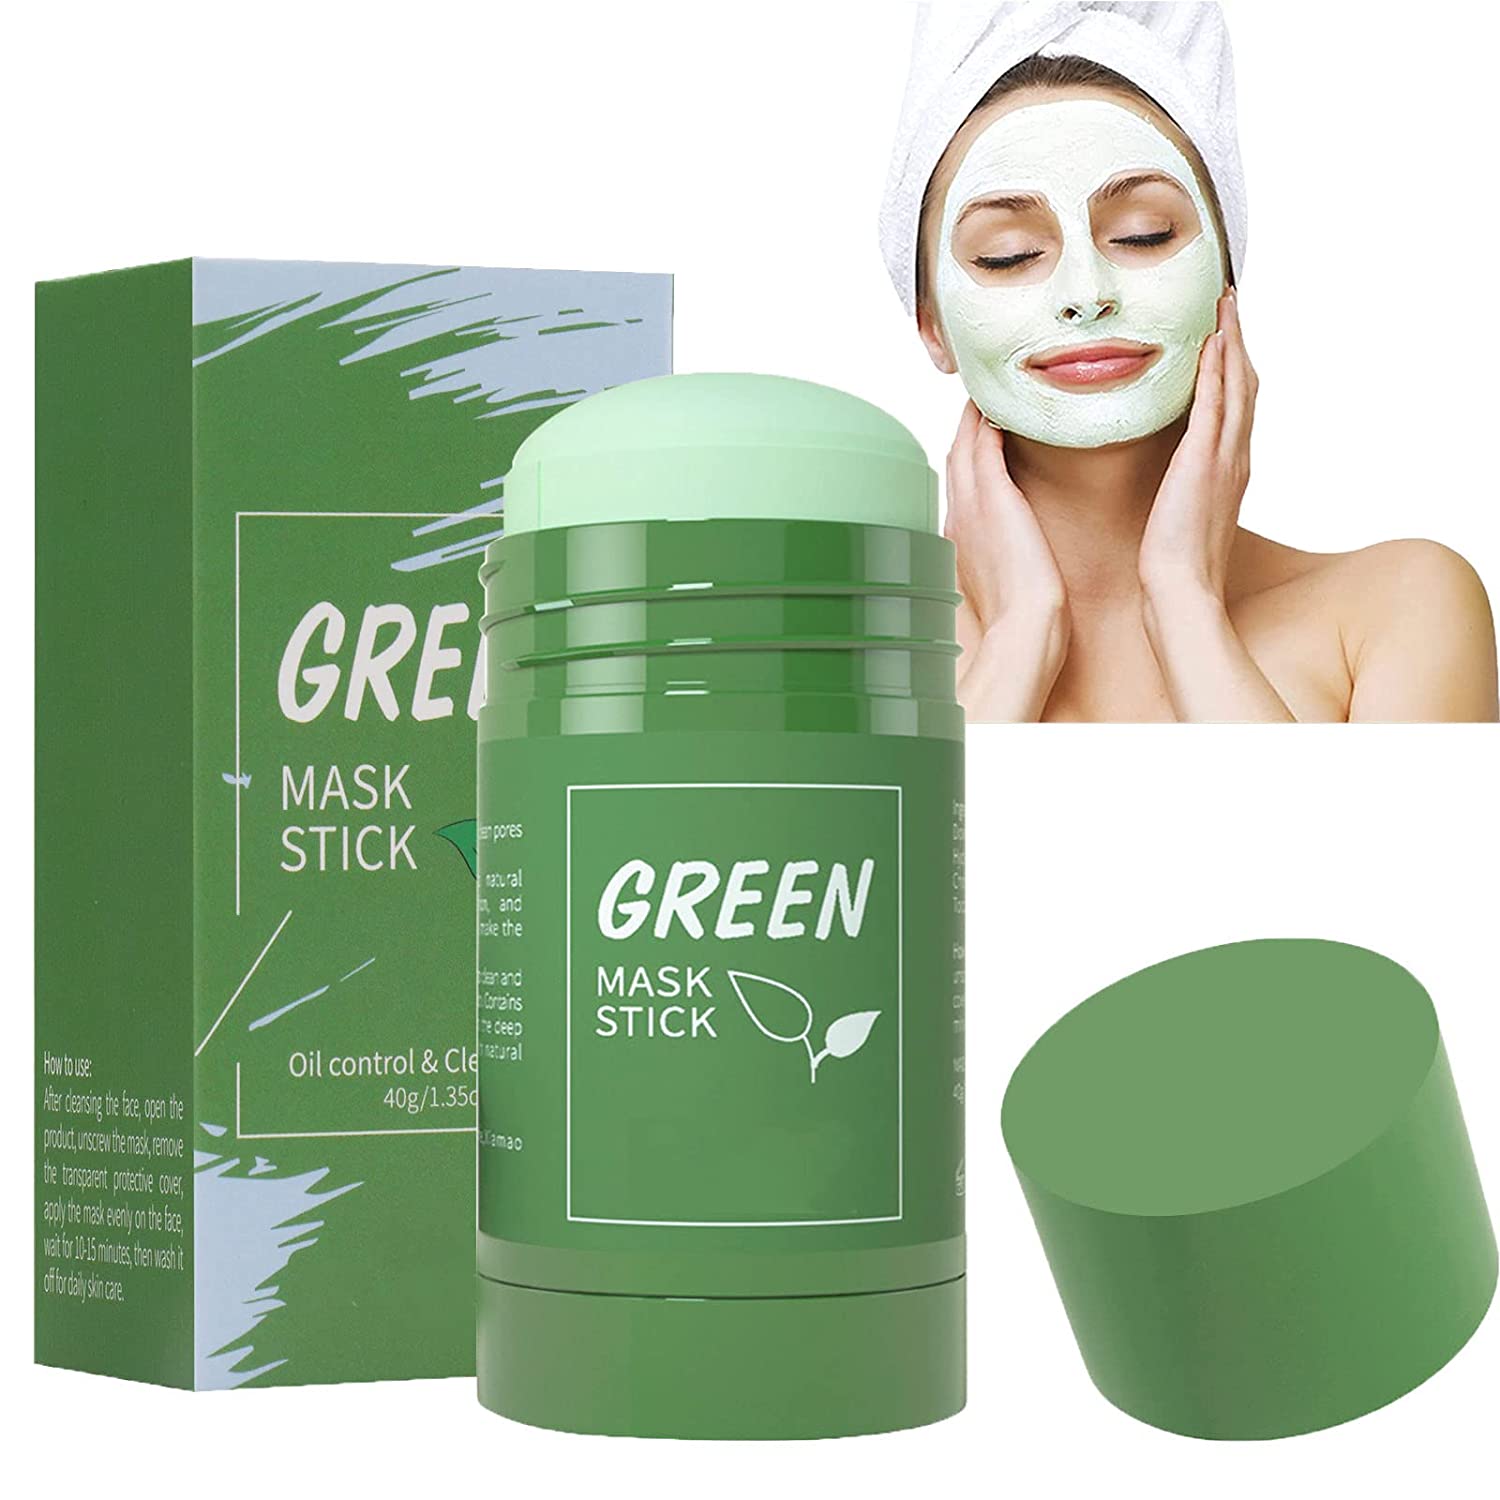 Alelyer Face Cleansing Mask, Green Mask Stick, Green Tea Mask Stick, Moisturising, 